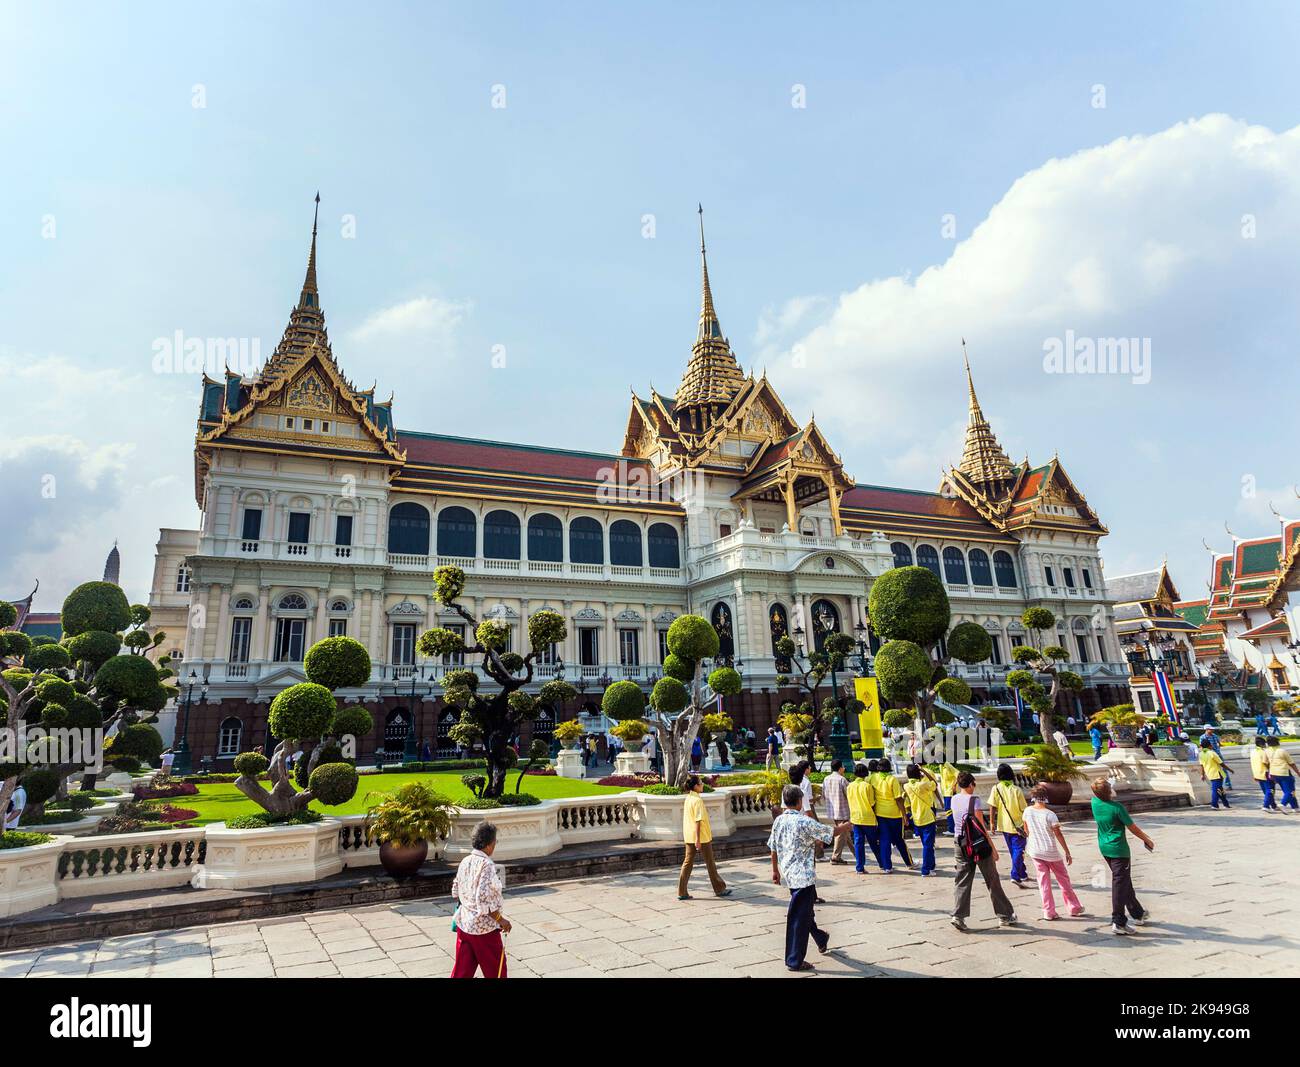 BANGKOK, THAILAND - JAN 4: people visit Chakri Maha Prasat in Grand Palace on January 4, 2010 in Bangkok, Thailand.  The palace was built by King Rama Stock Photo